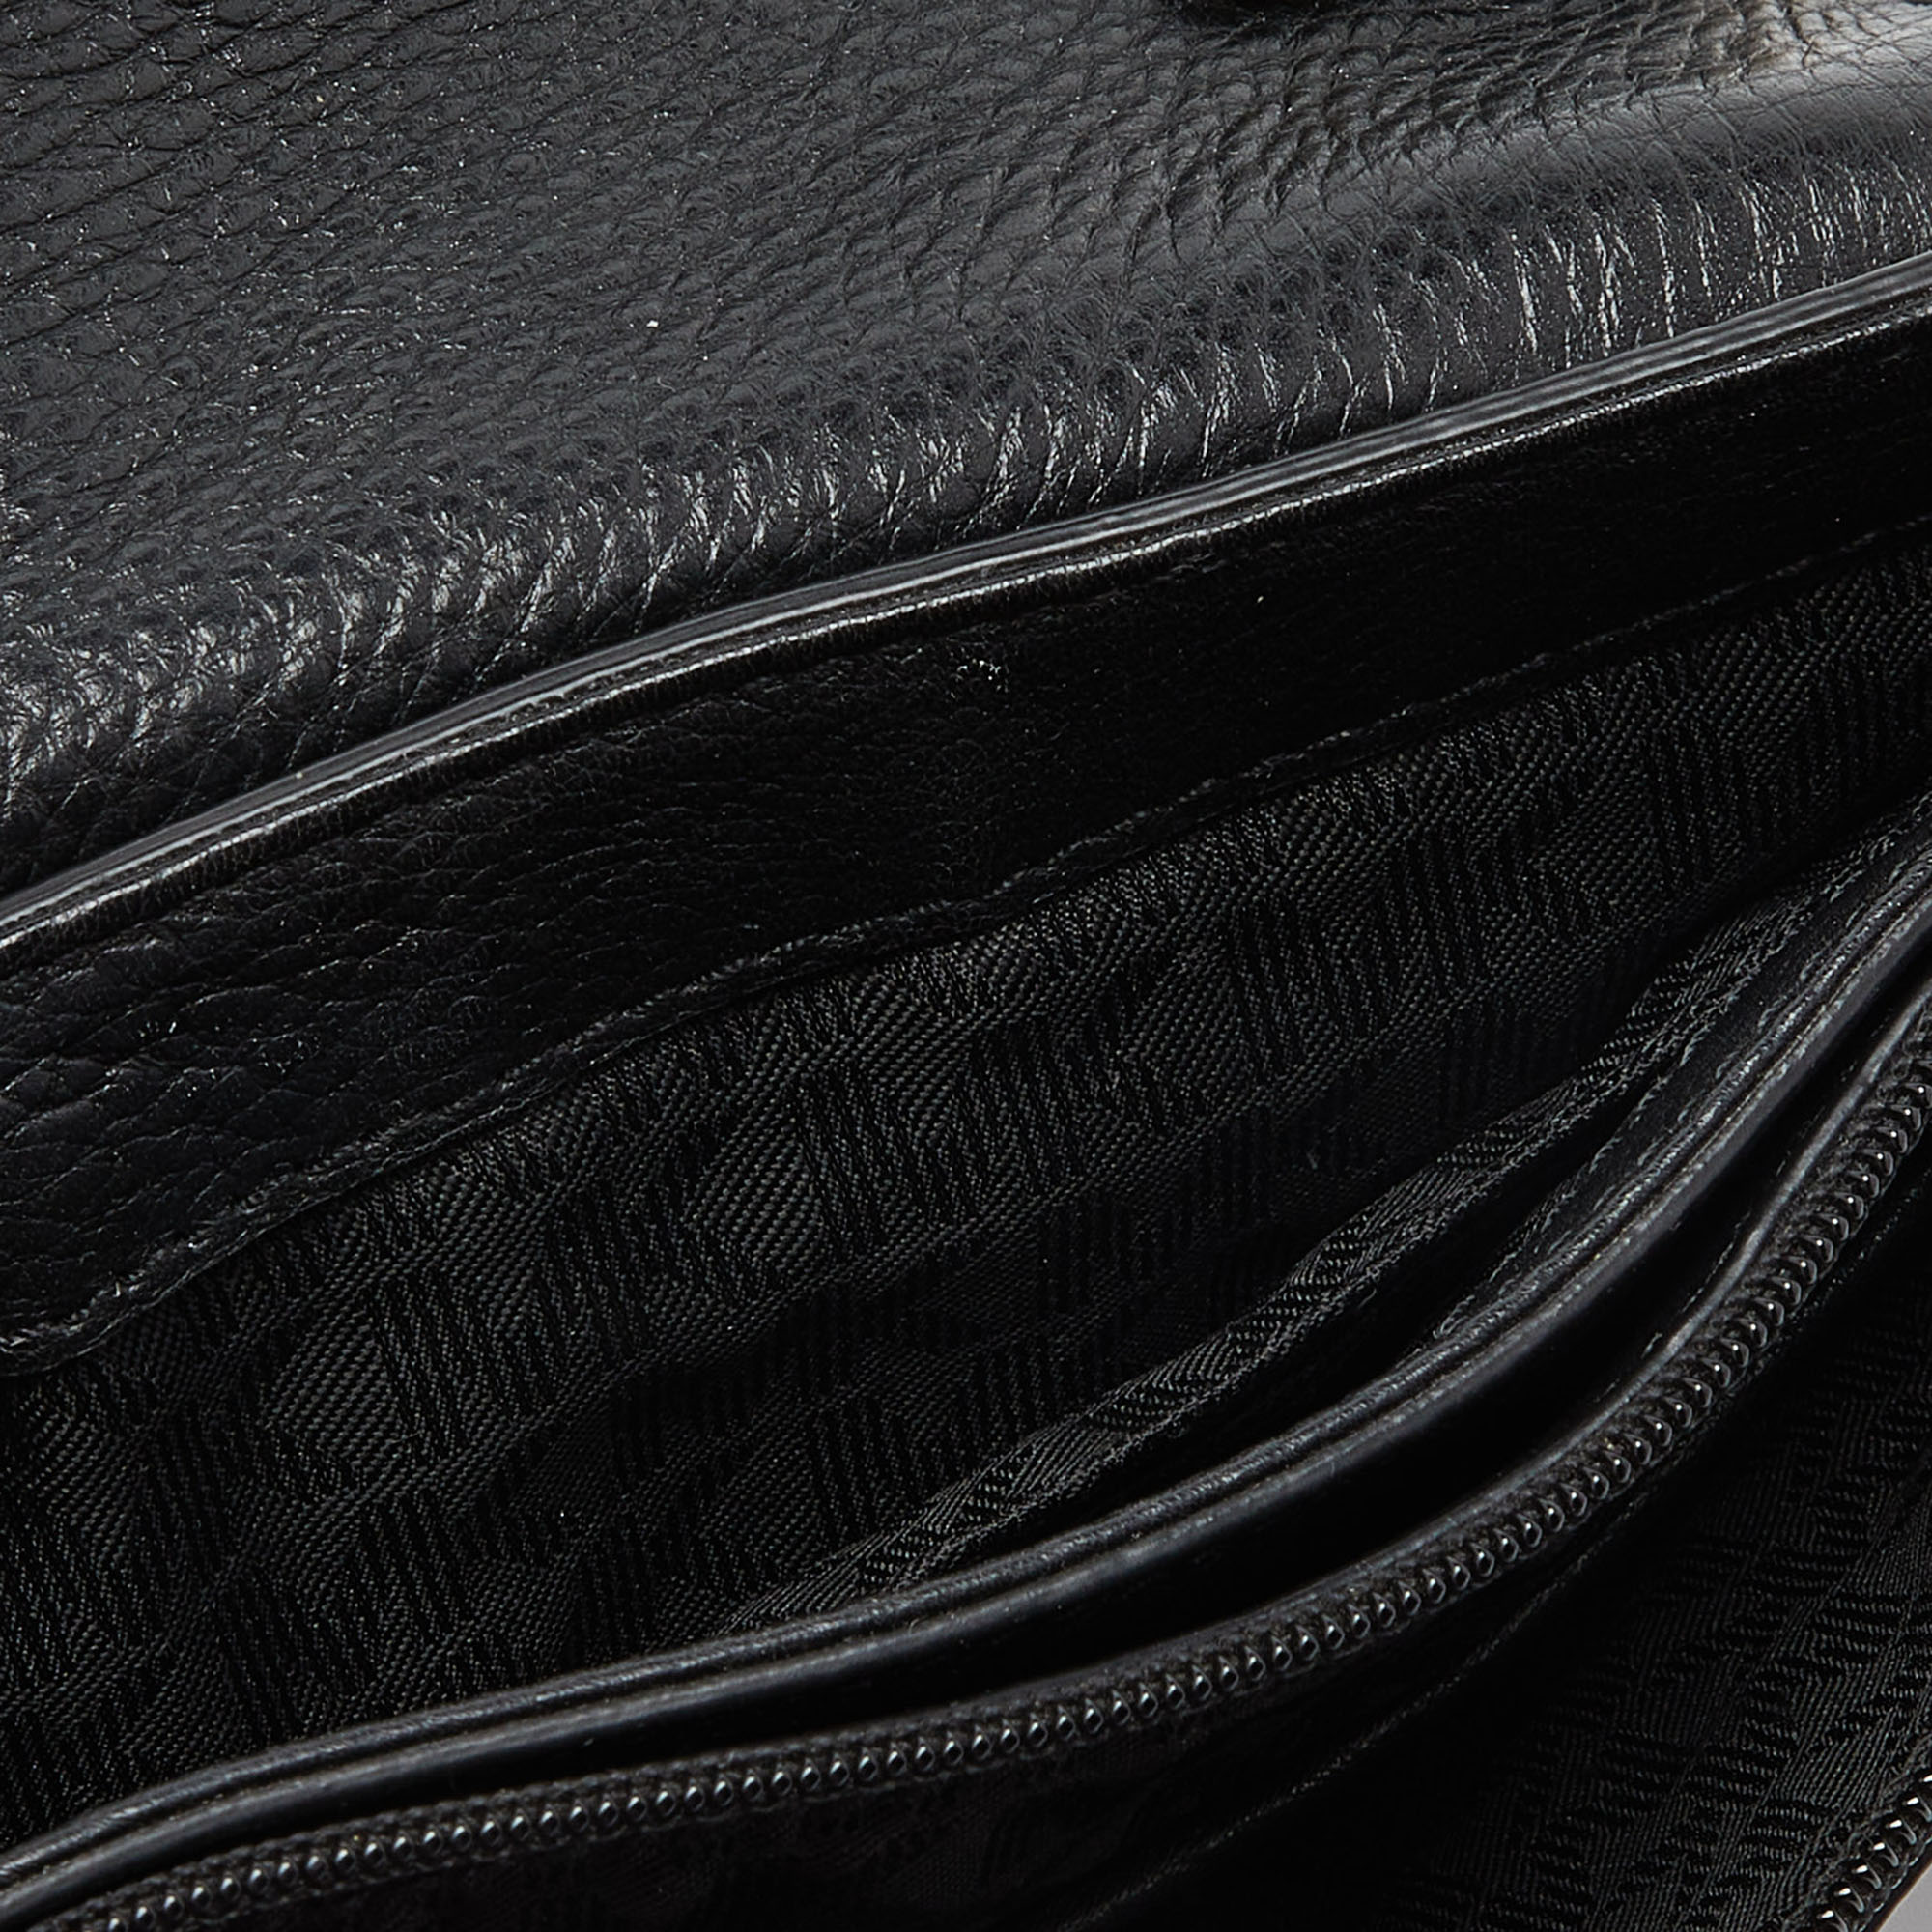 Michael Kors Black Leather Flap Crossbody Bag